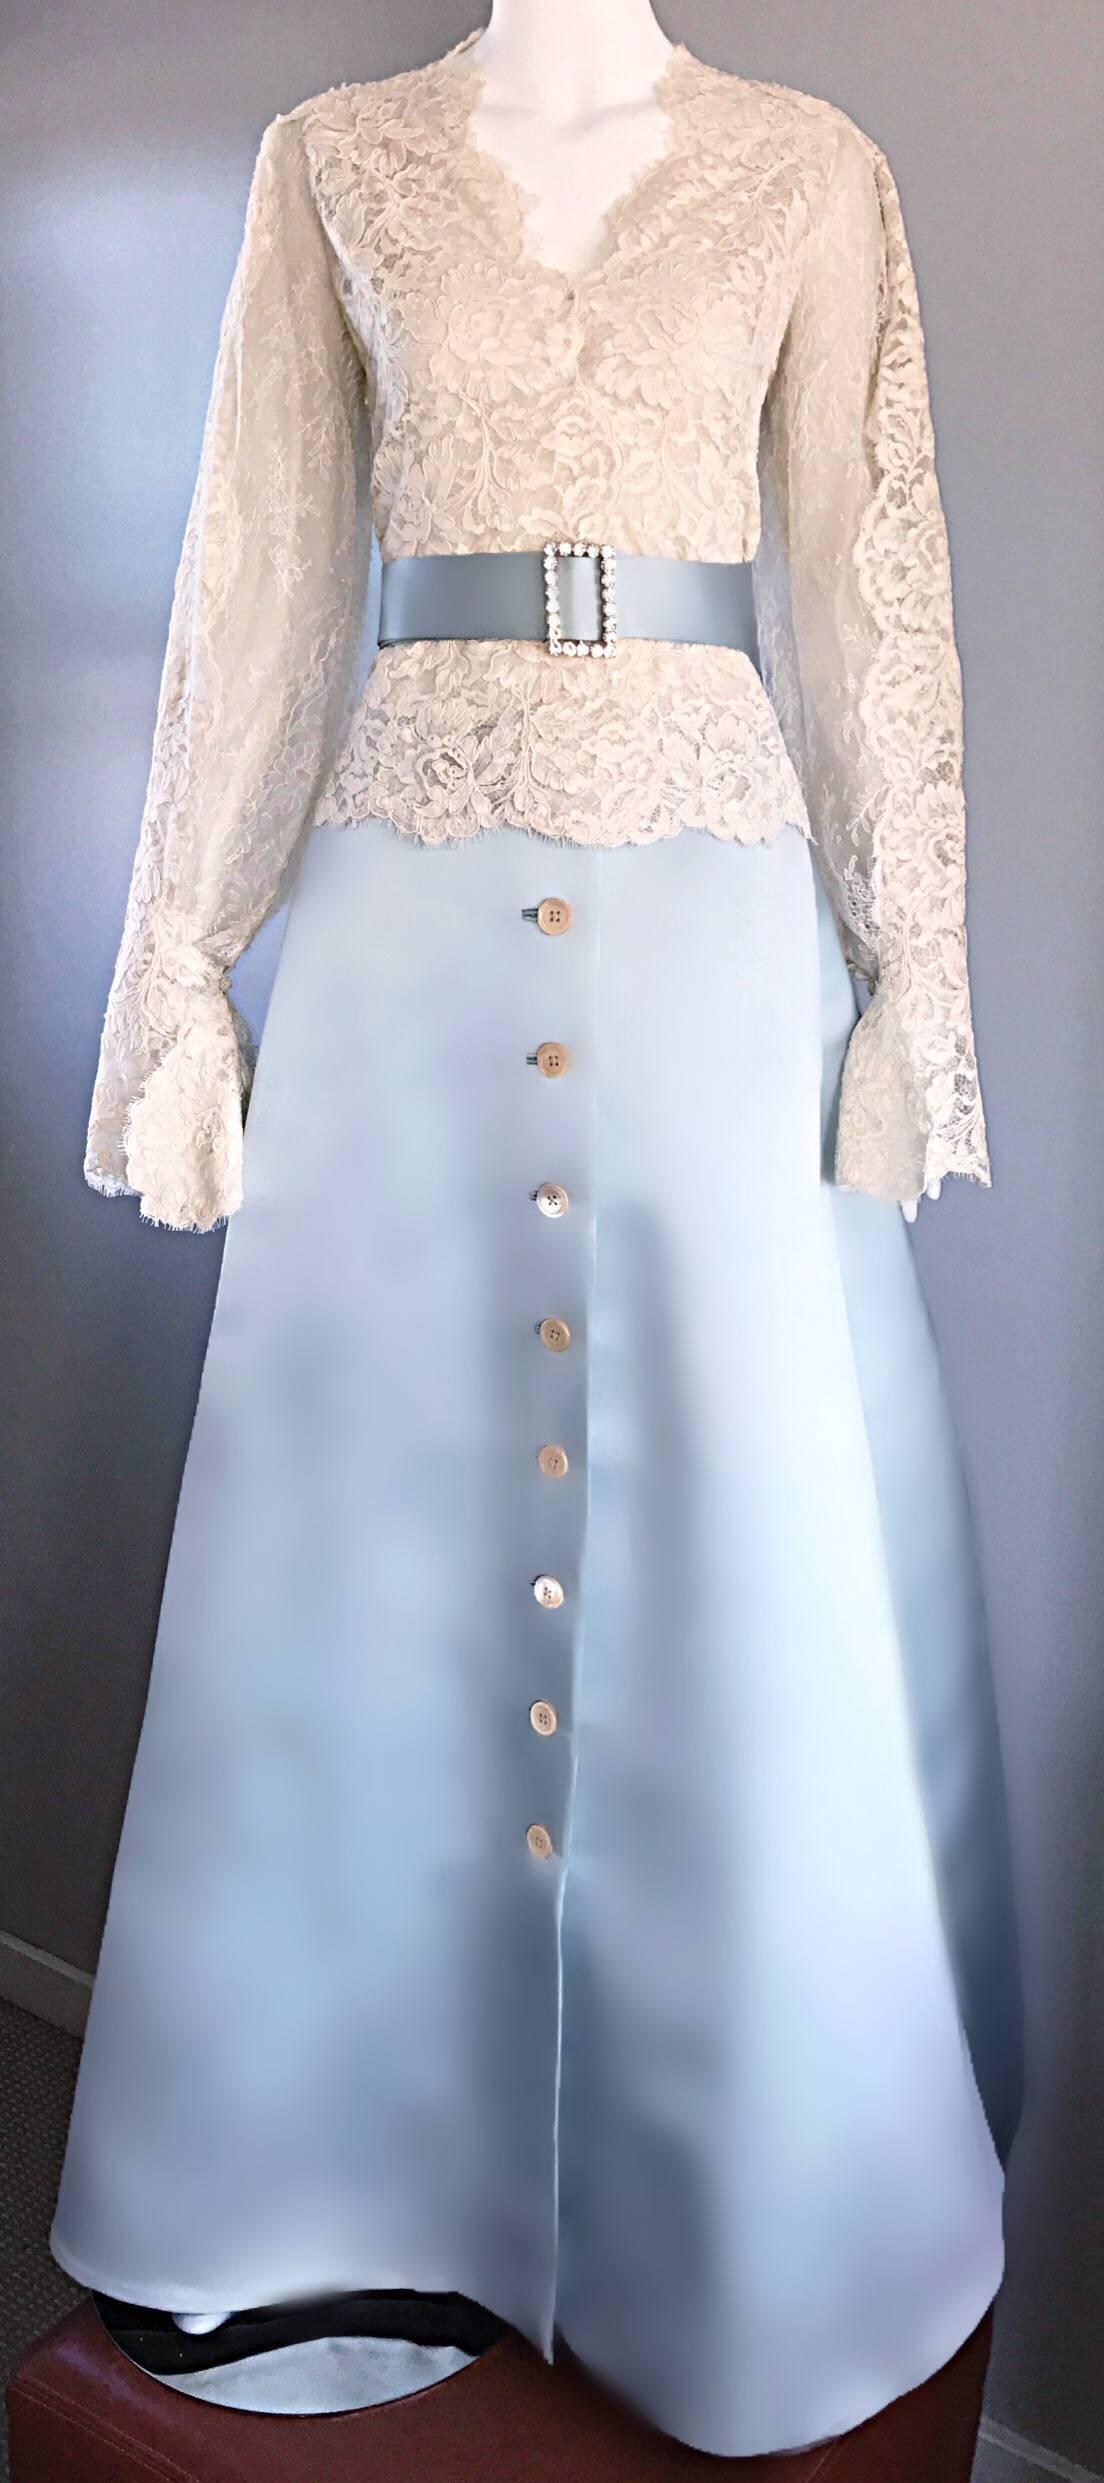 Exquisite Vintage Bill Blass 1970s Baby Blue + White Lace 3 Piece Evening Gown 1